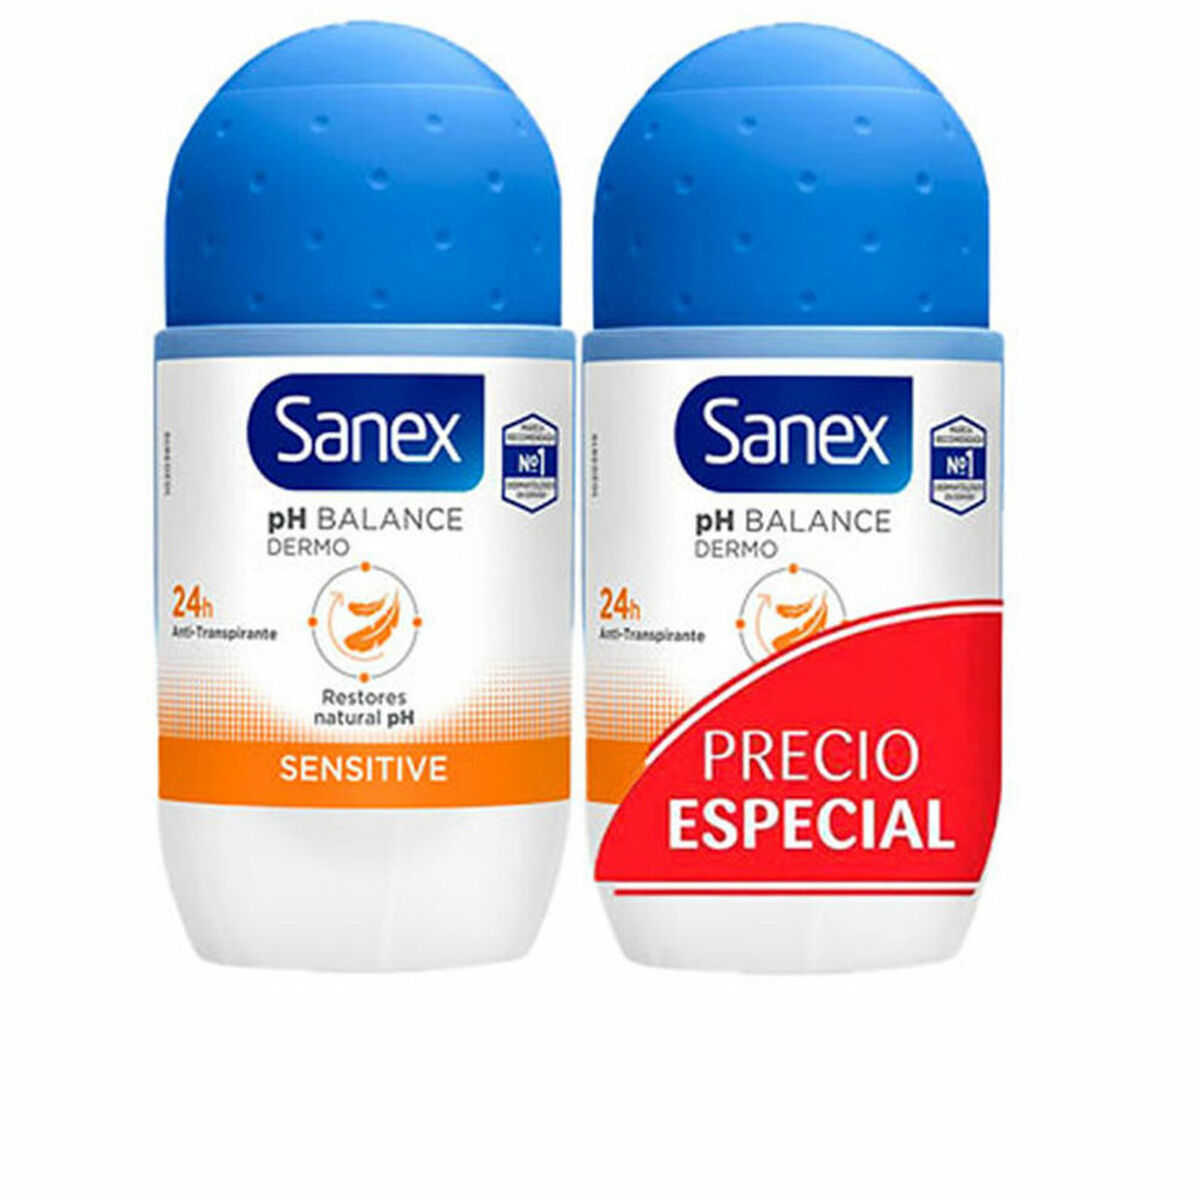 Roll-on deodorant sanex citlivý 2 x 50 ml